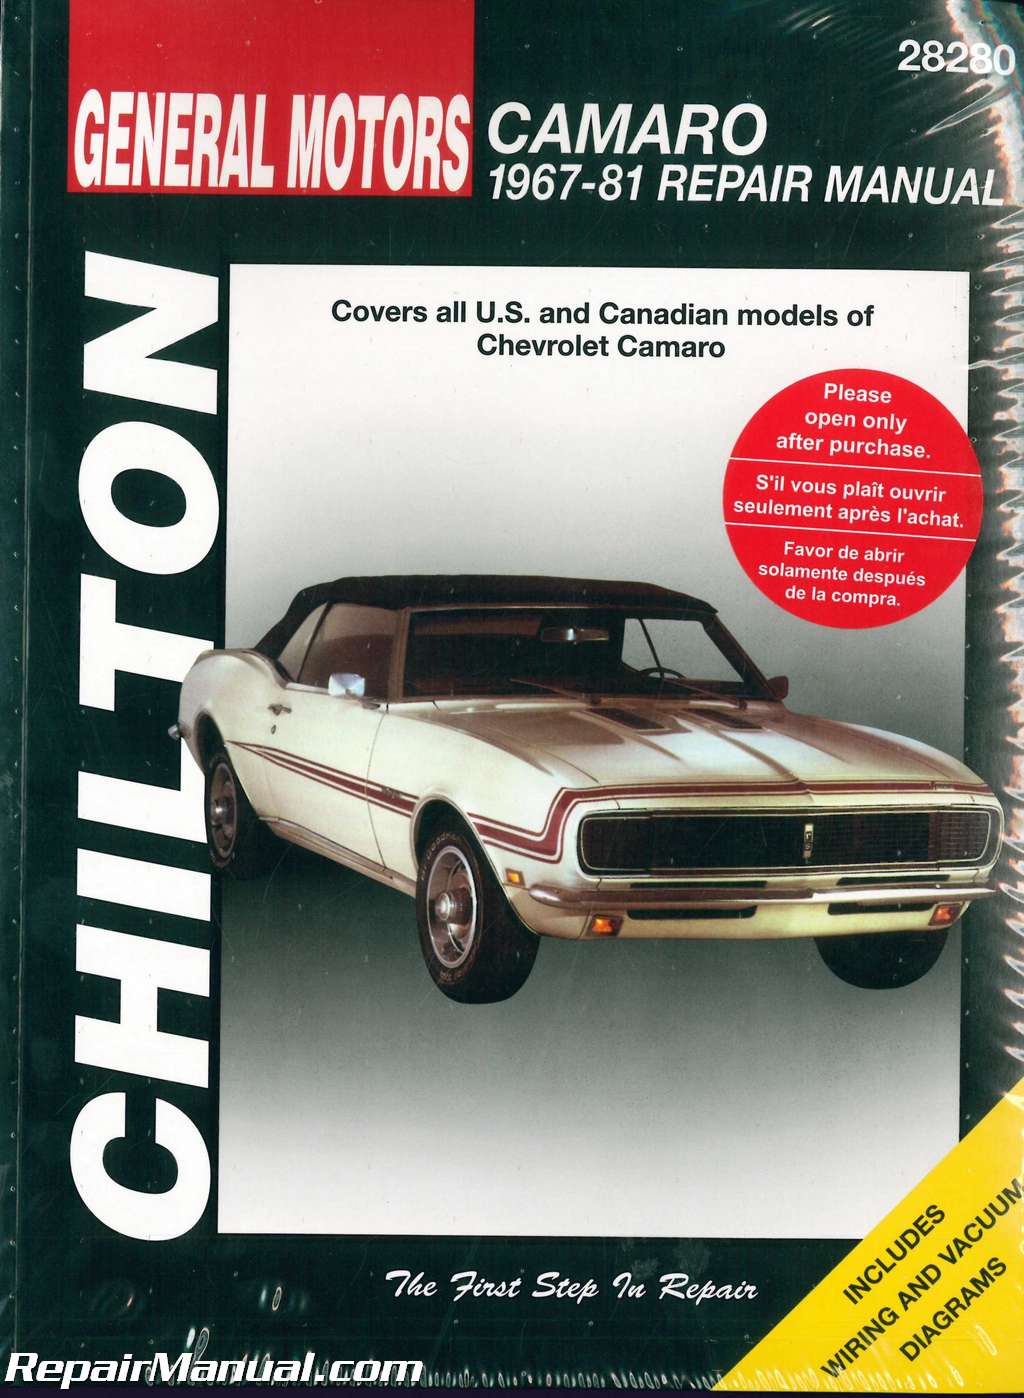 1967-1981 Chevrolet Camaro Repair Manual by Chilton